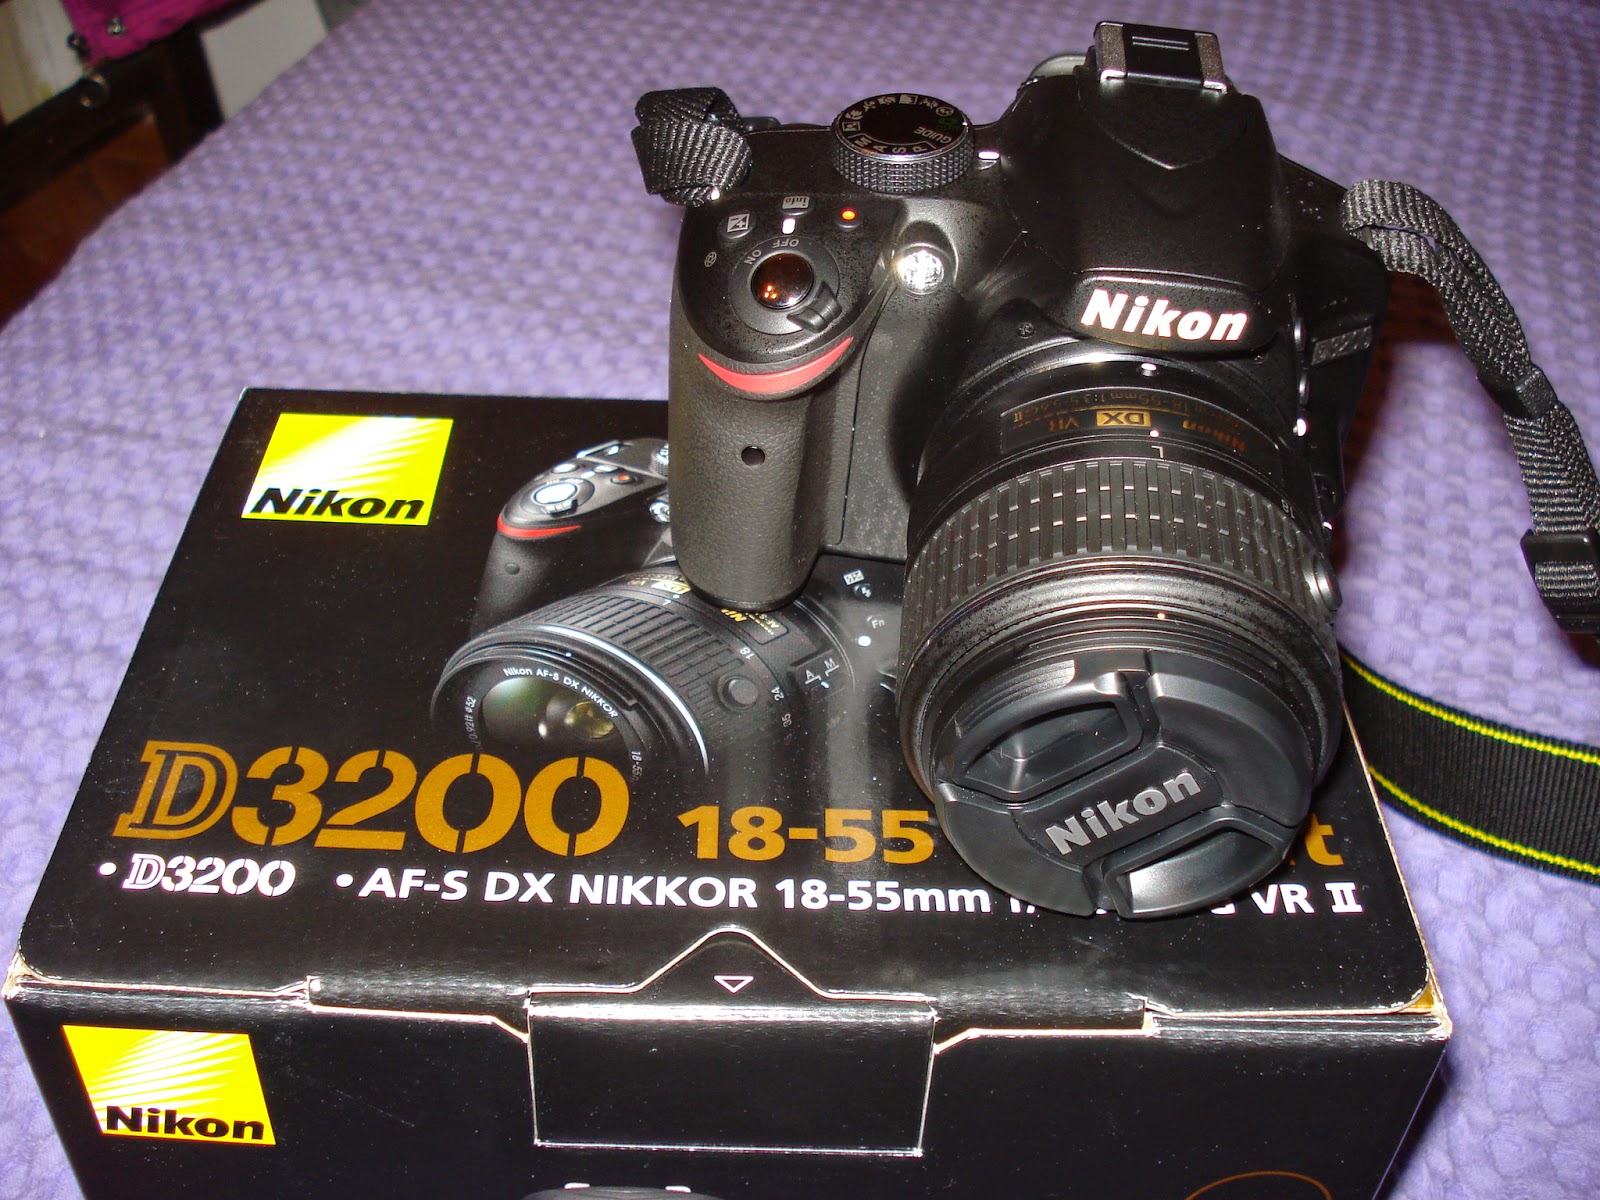 Nikon D3200 DSLR camera - consumer review